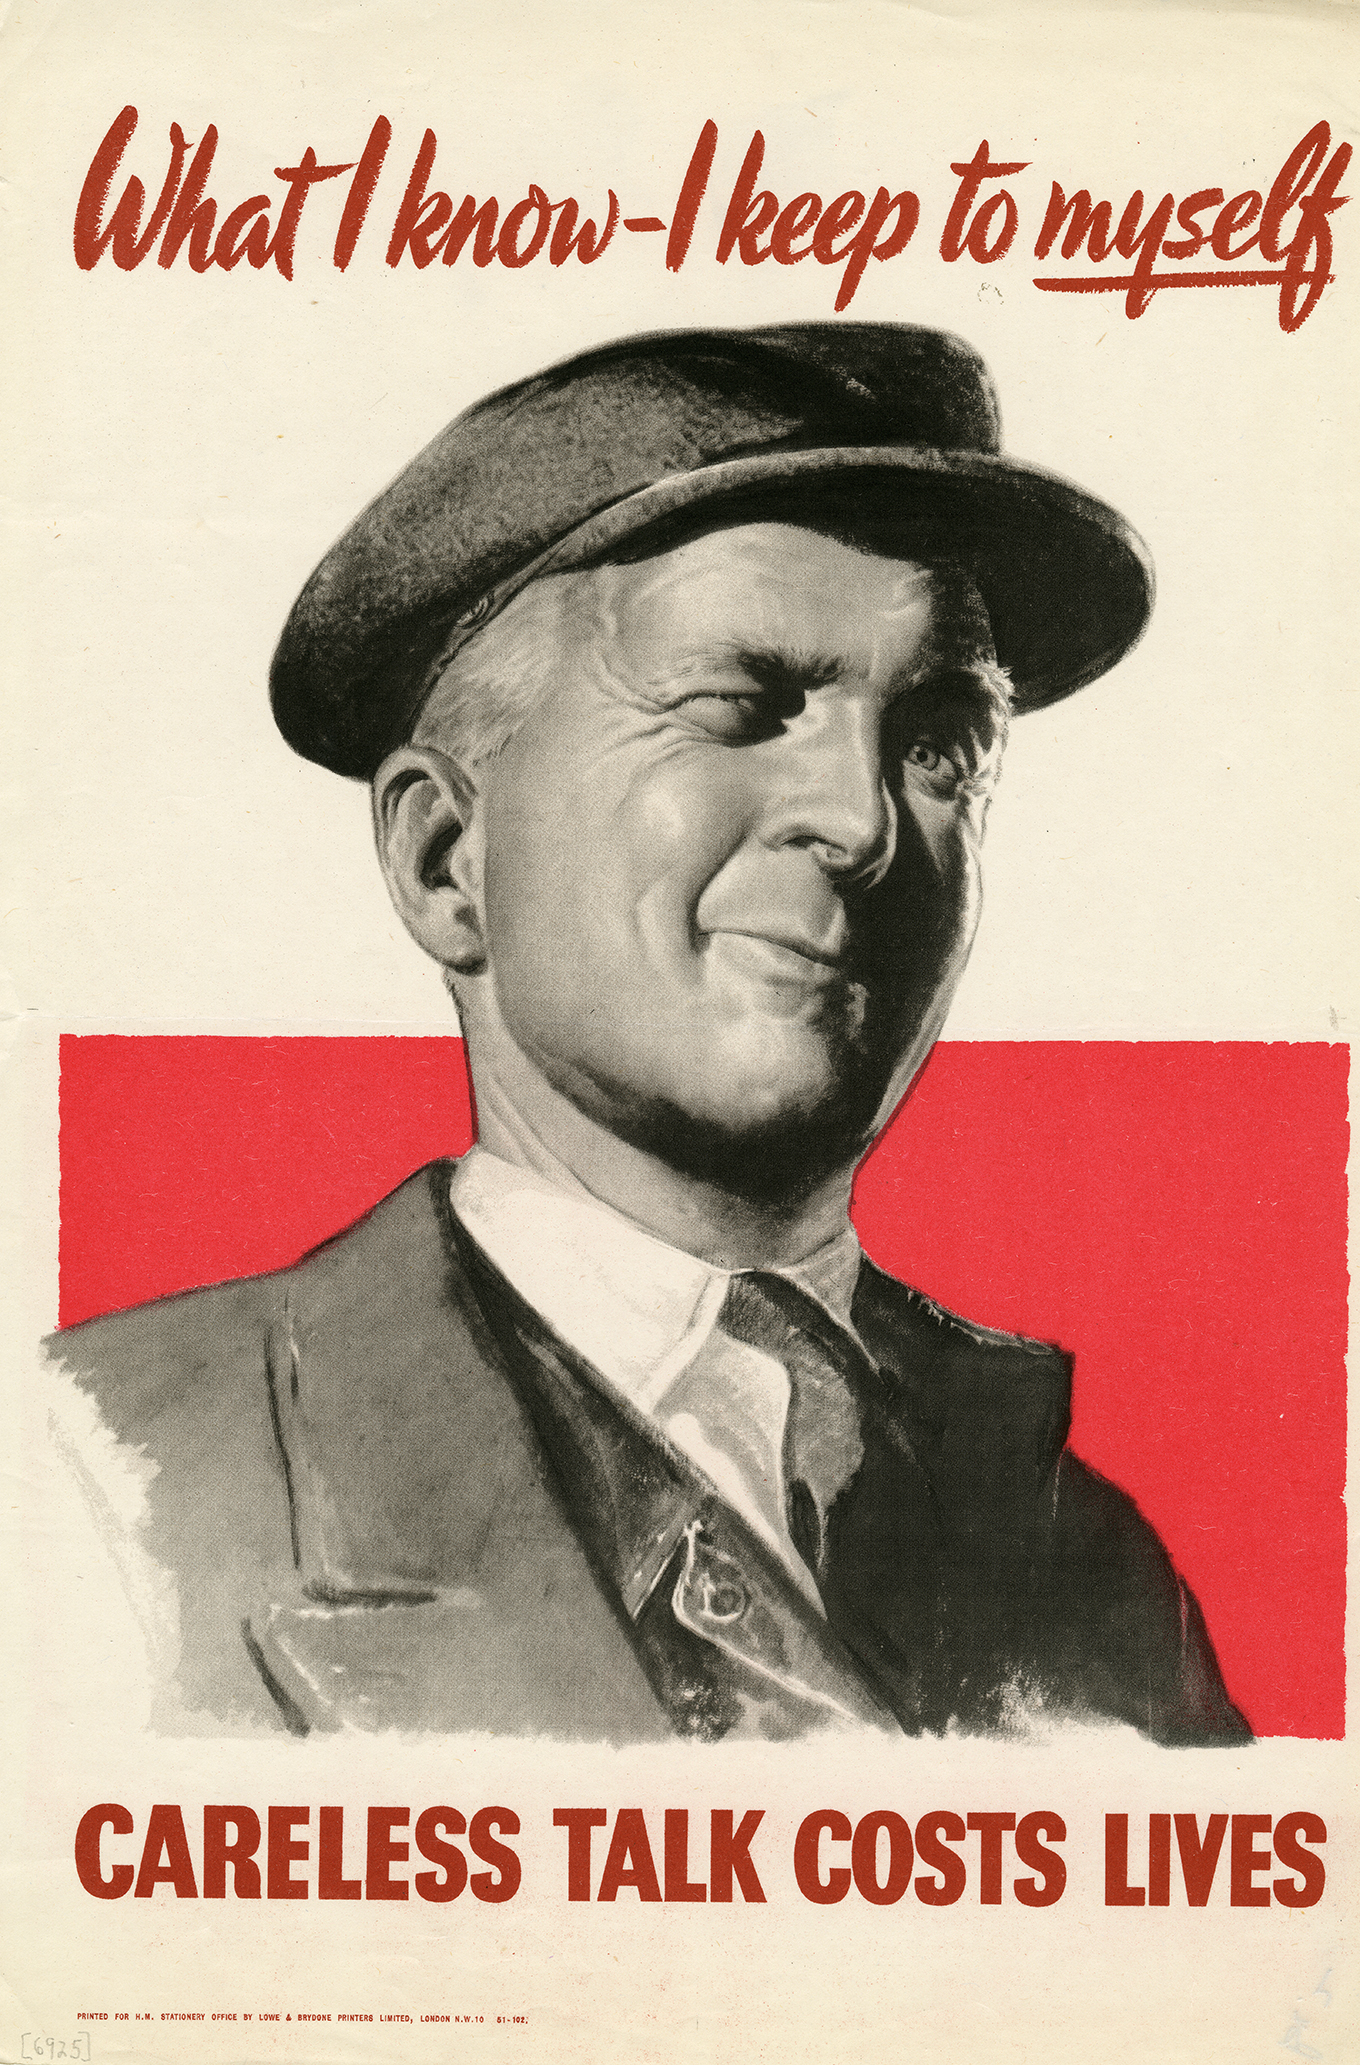 WWII US propaganda poster